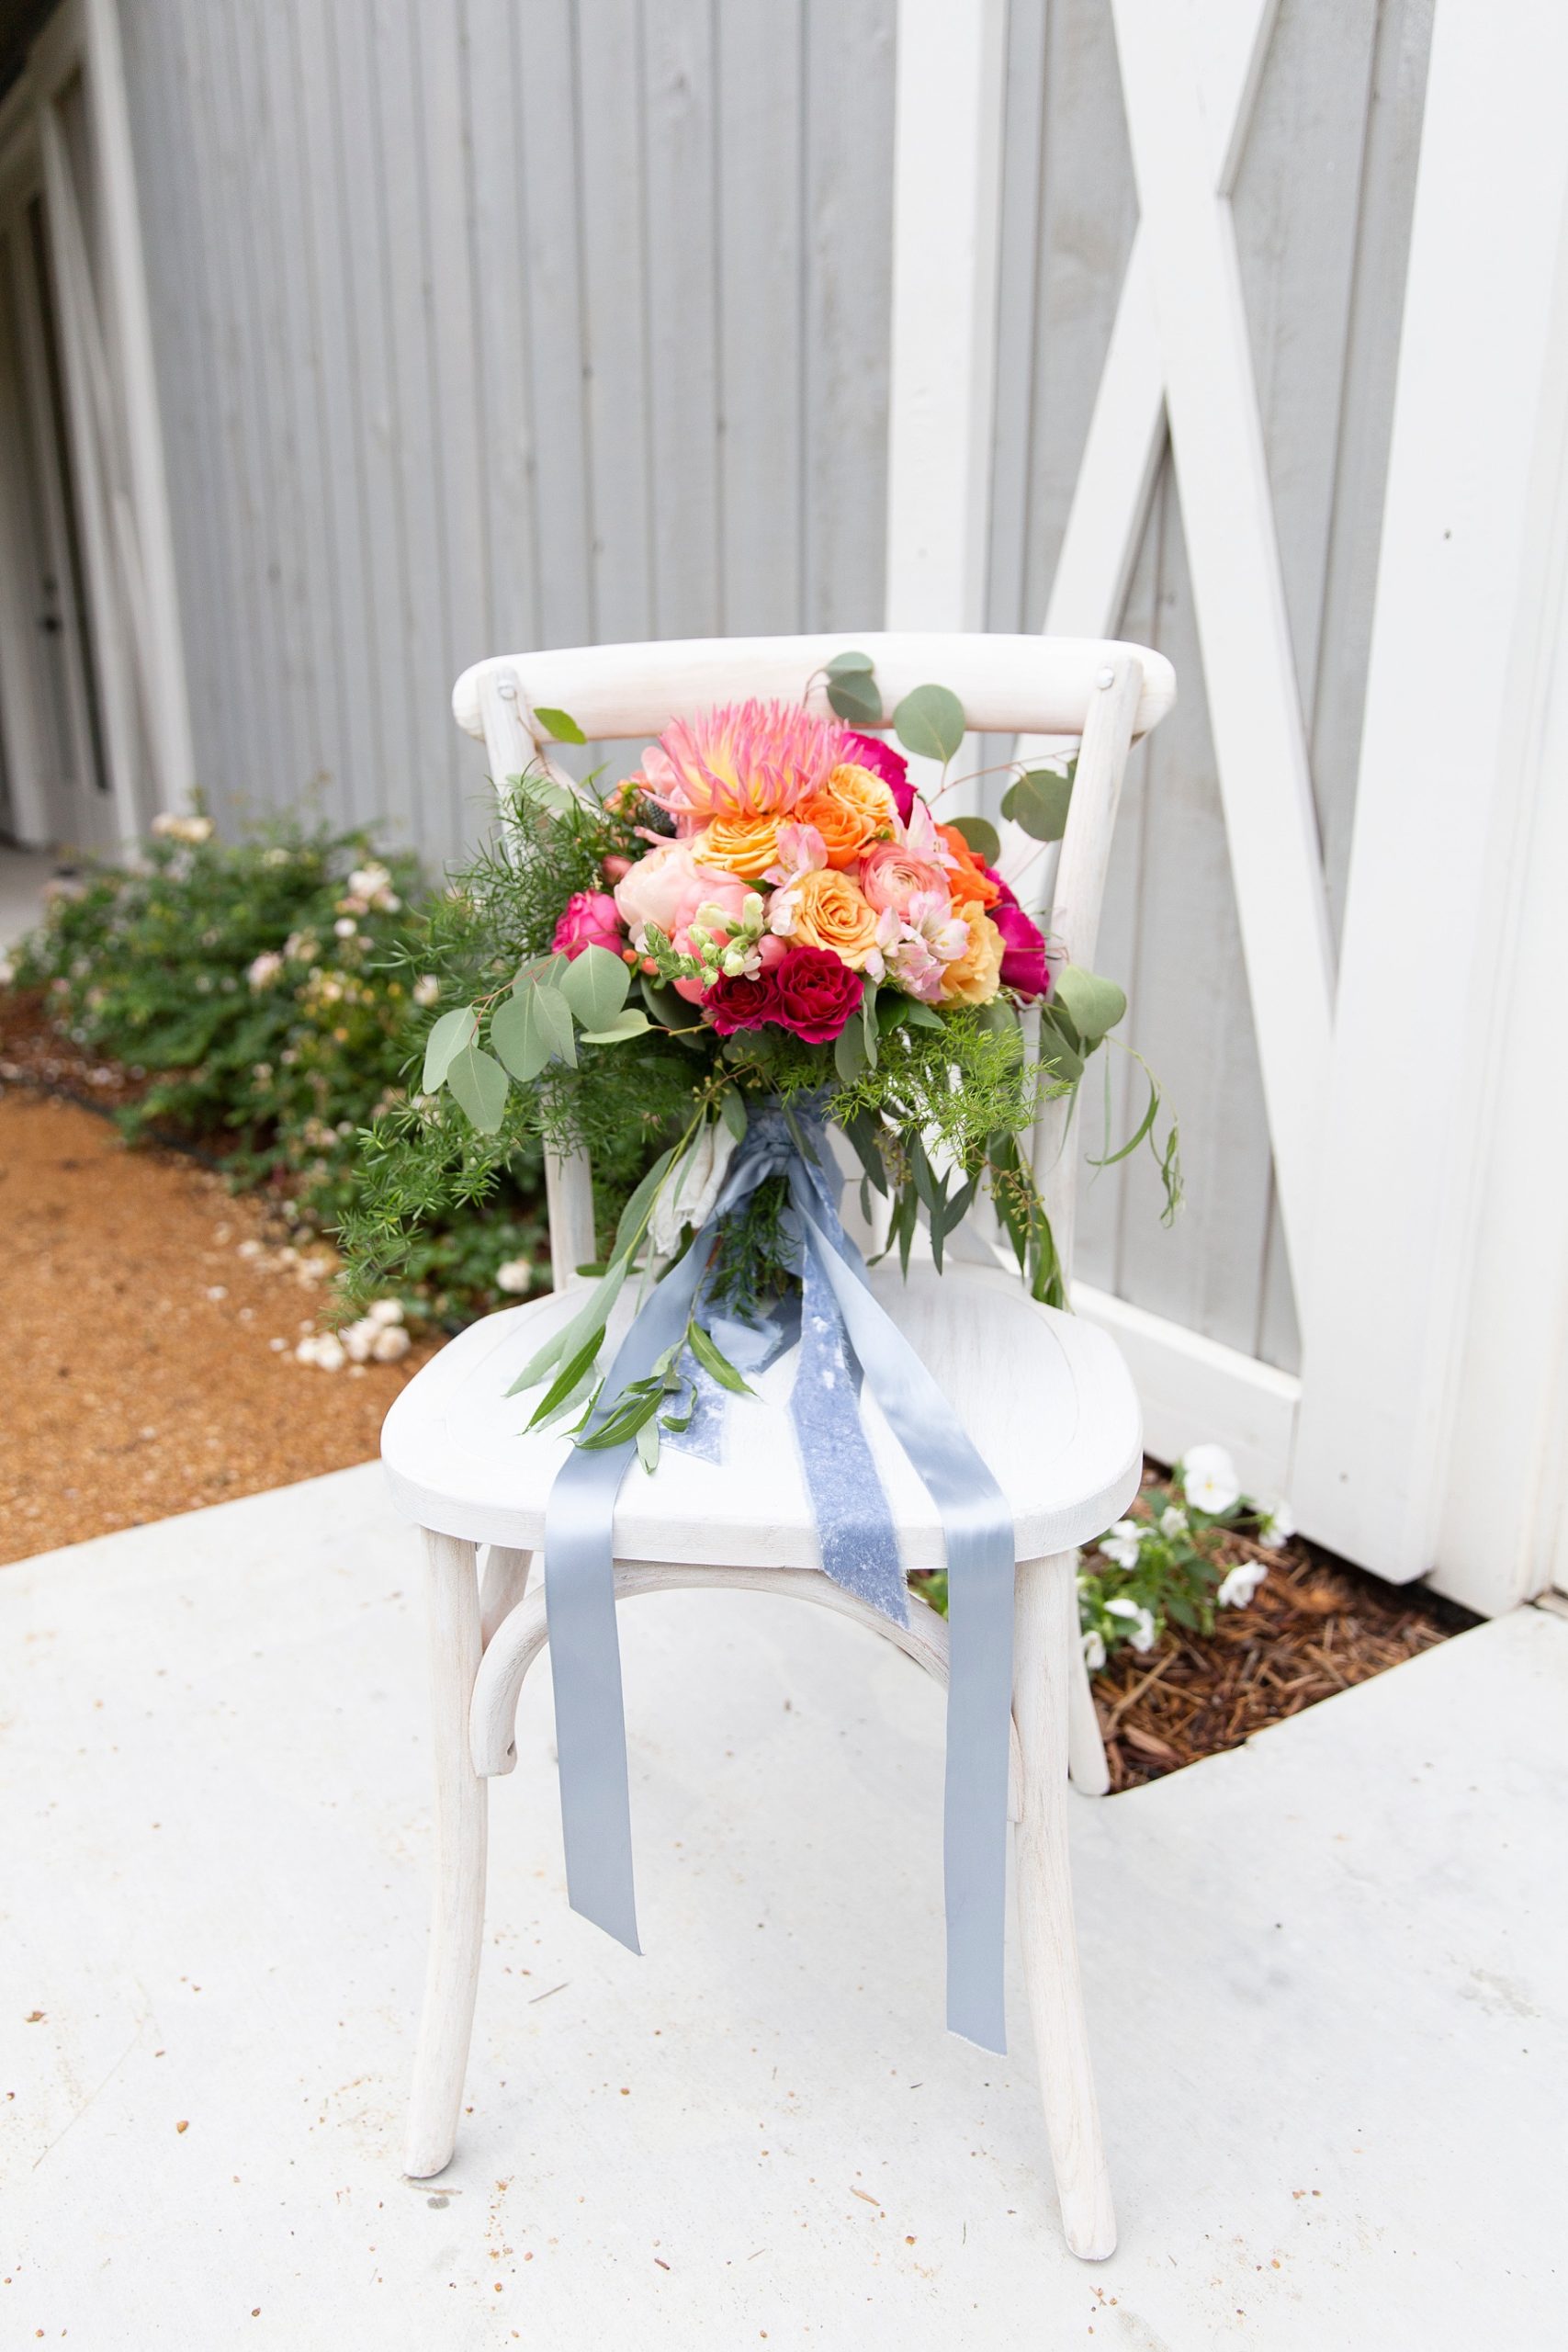 Randi Michelle Weddings photographs bright wedding bouquet